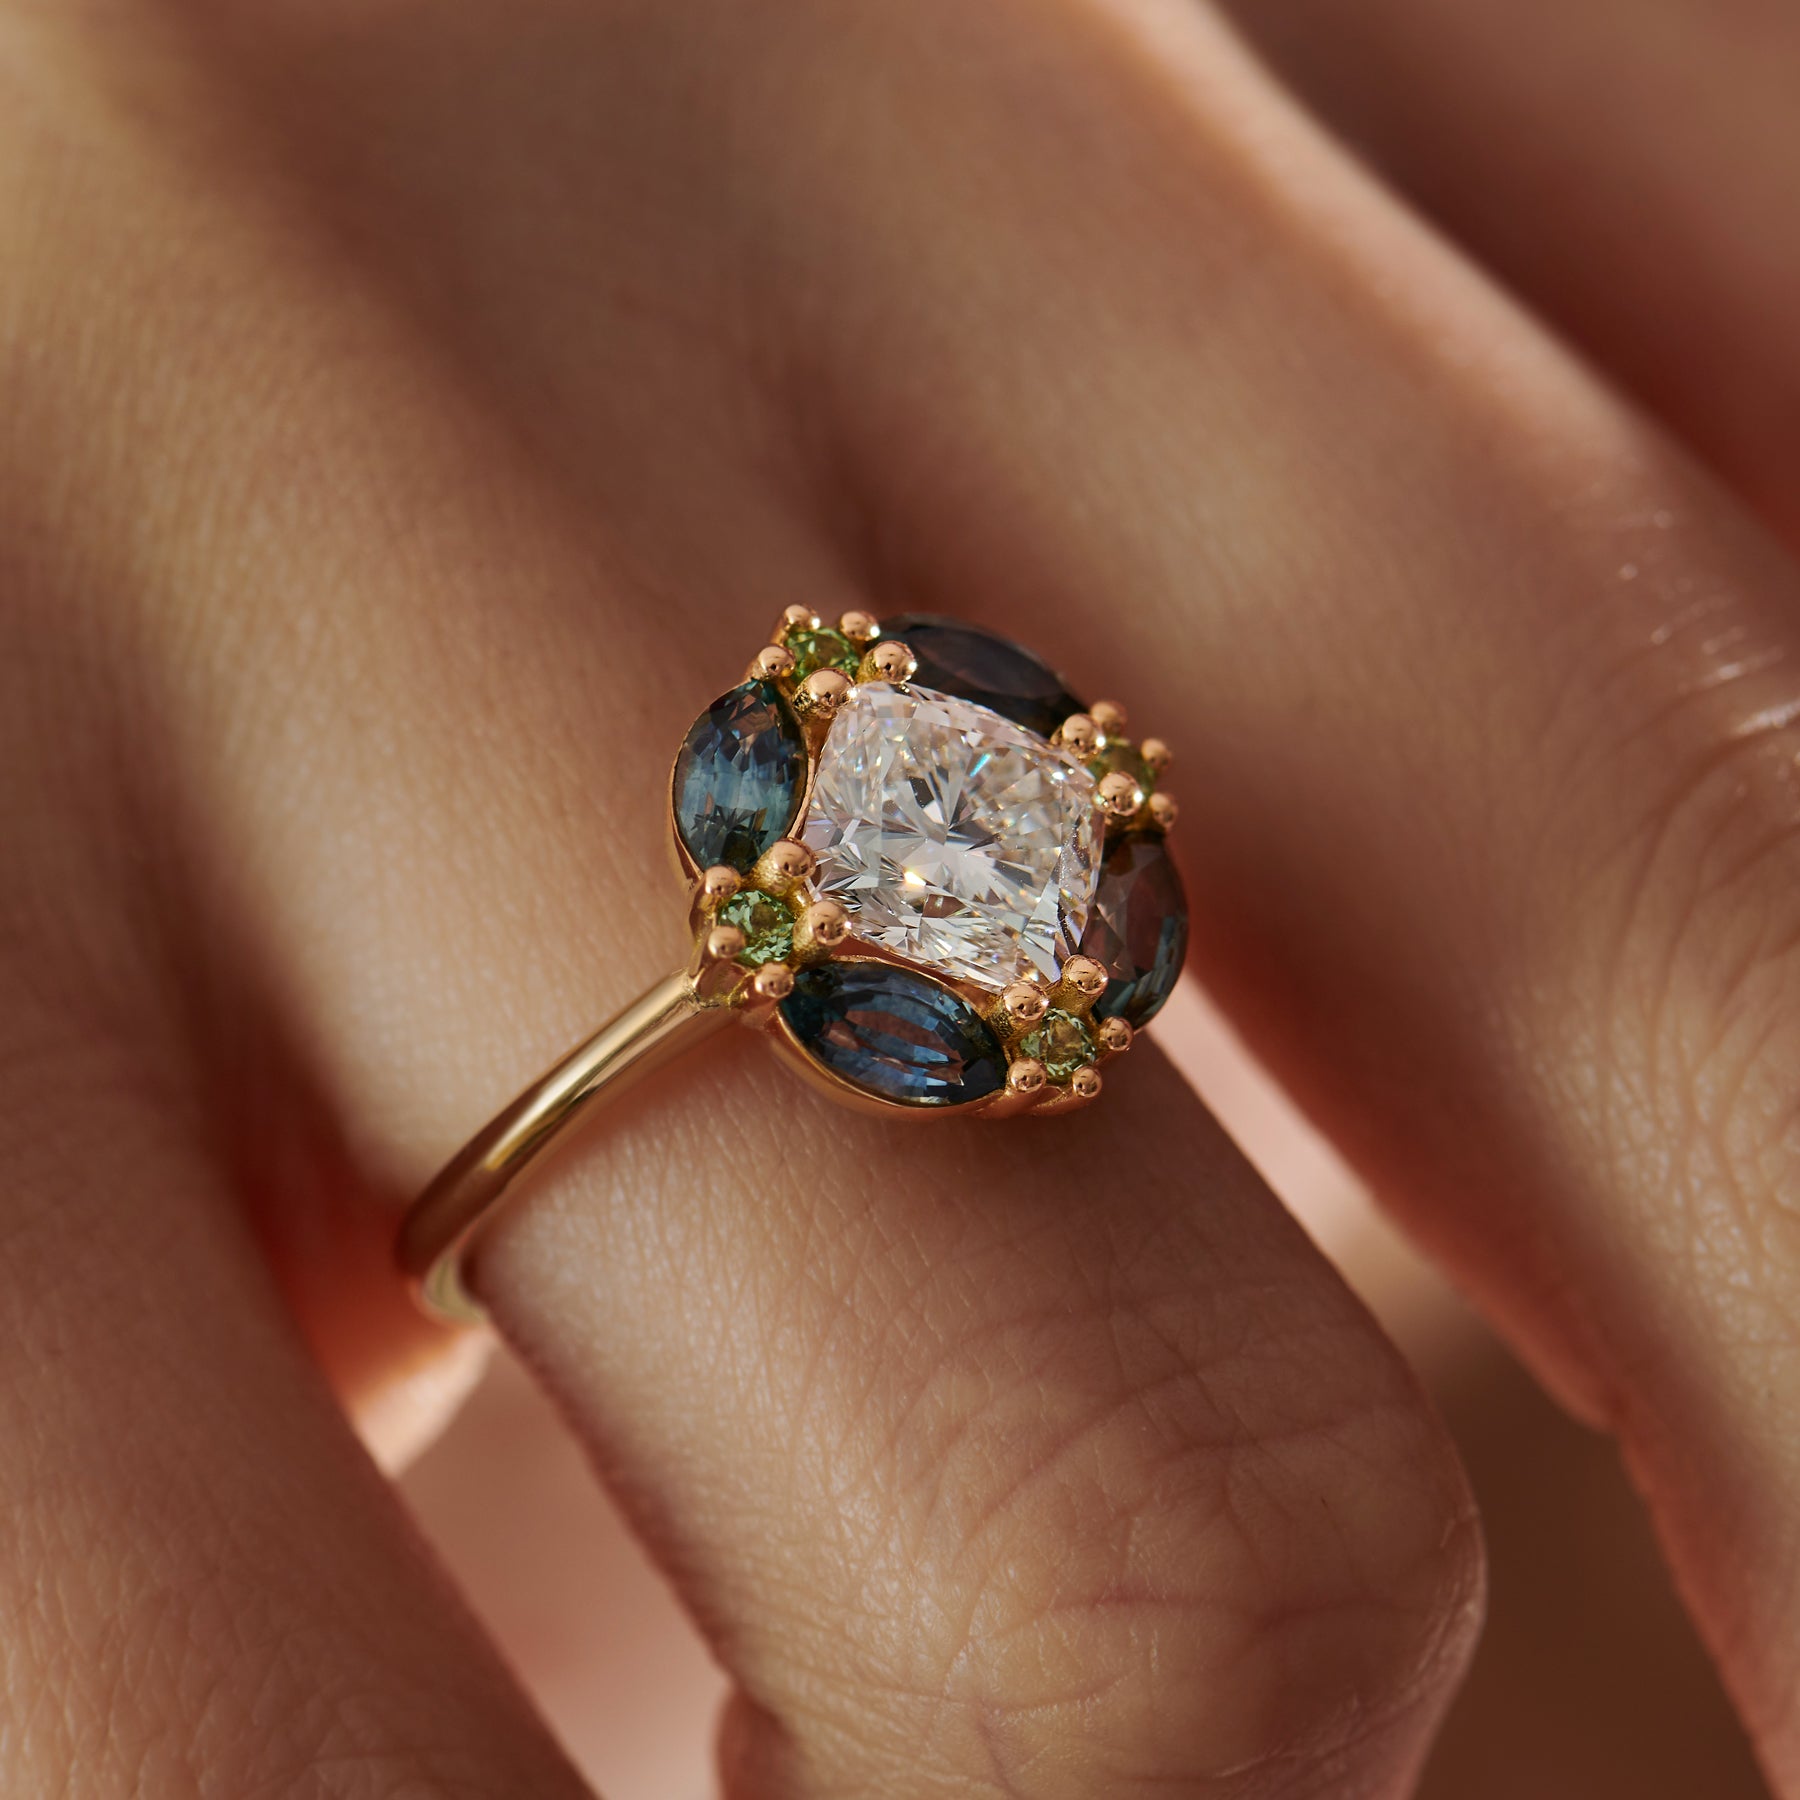 Rose Gold Cushion Cut Stone Engagement Ring